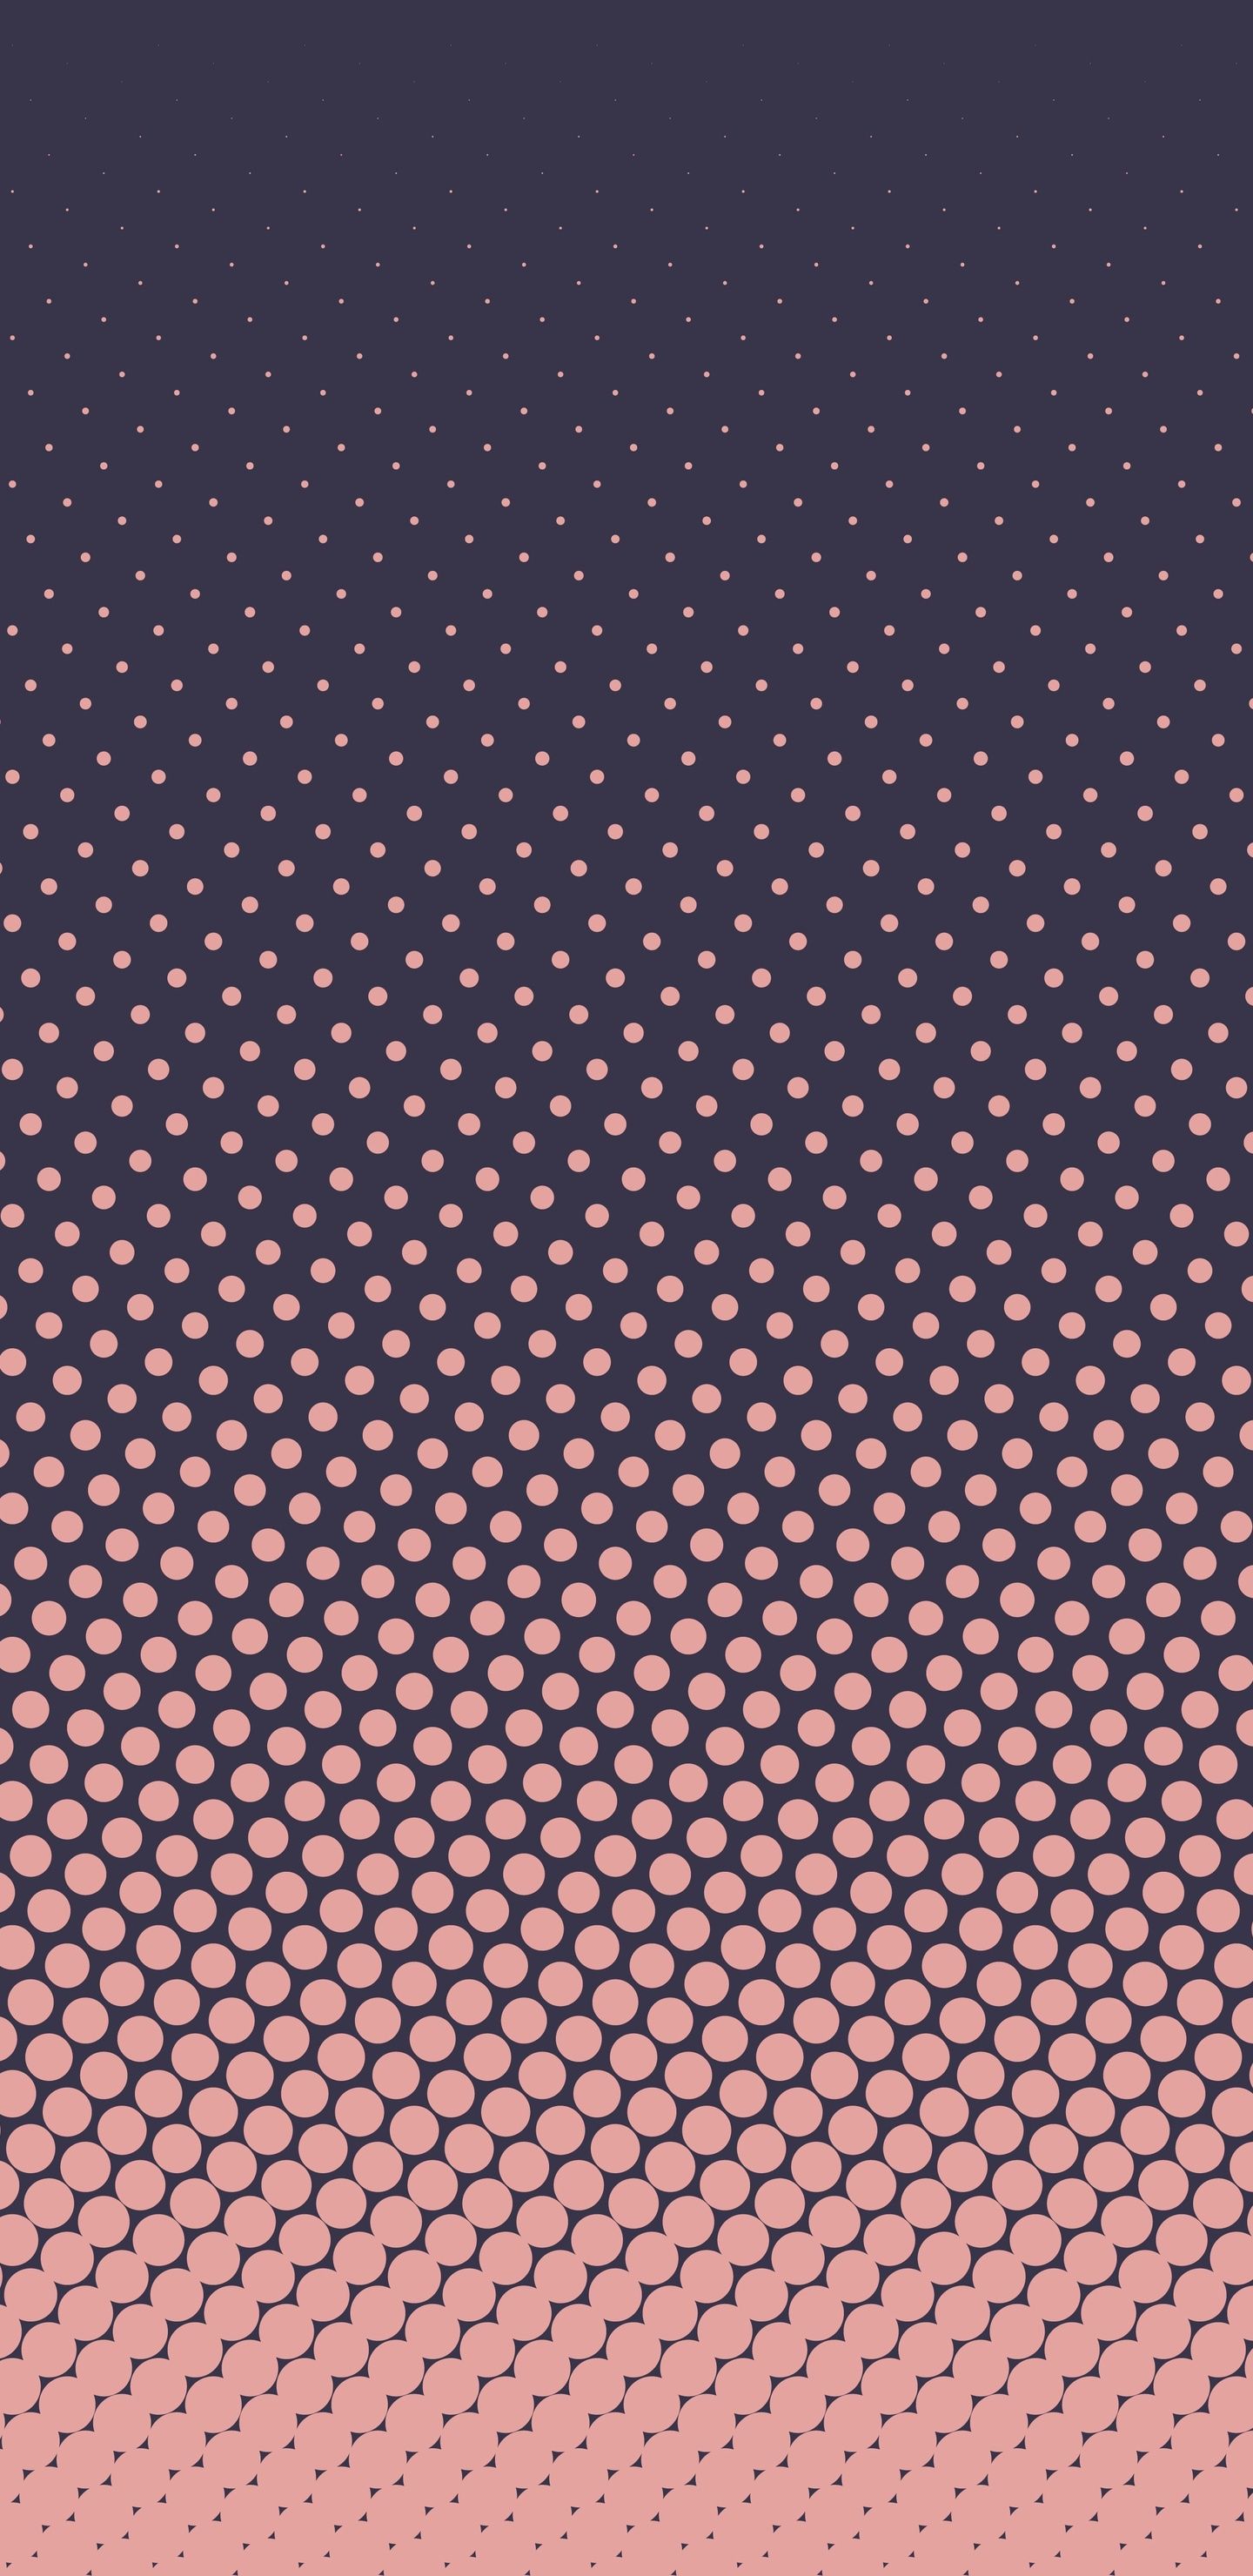 Pattern aesthetic Wallpaper Download